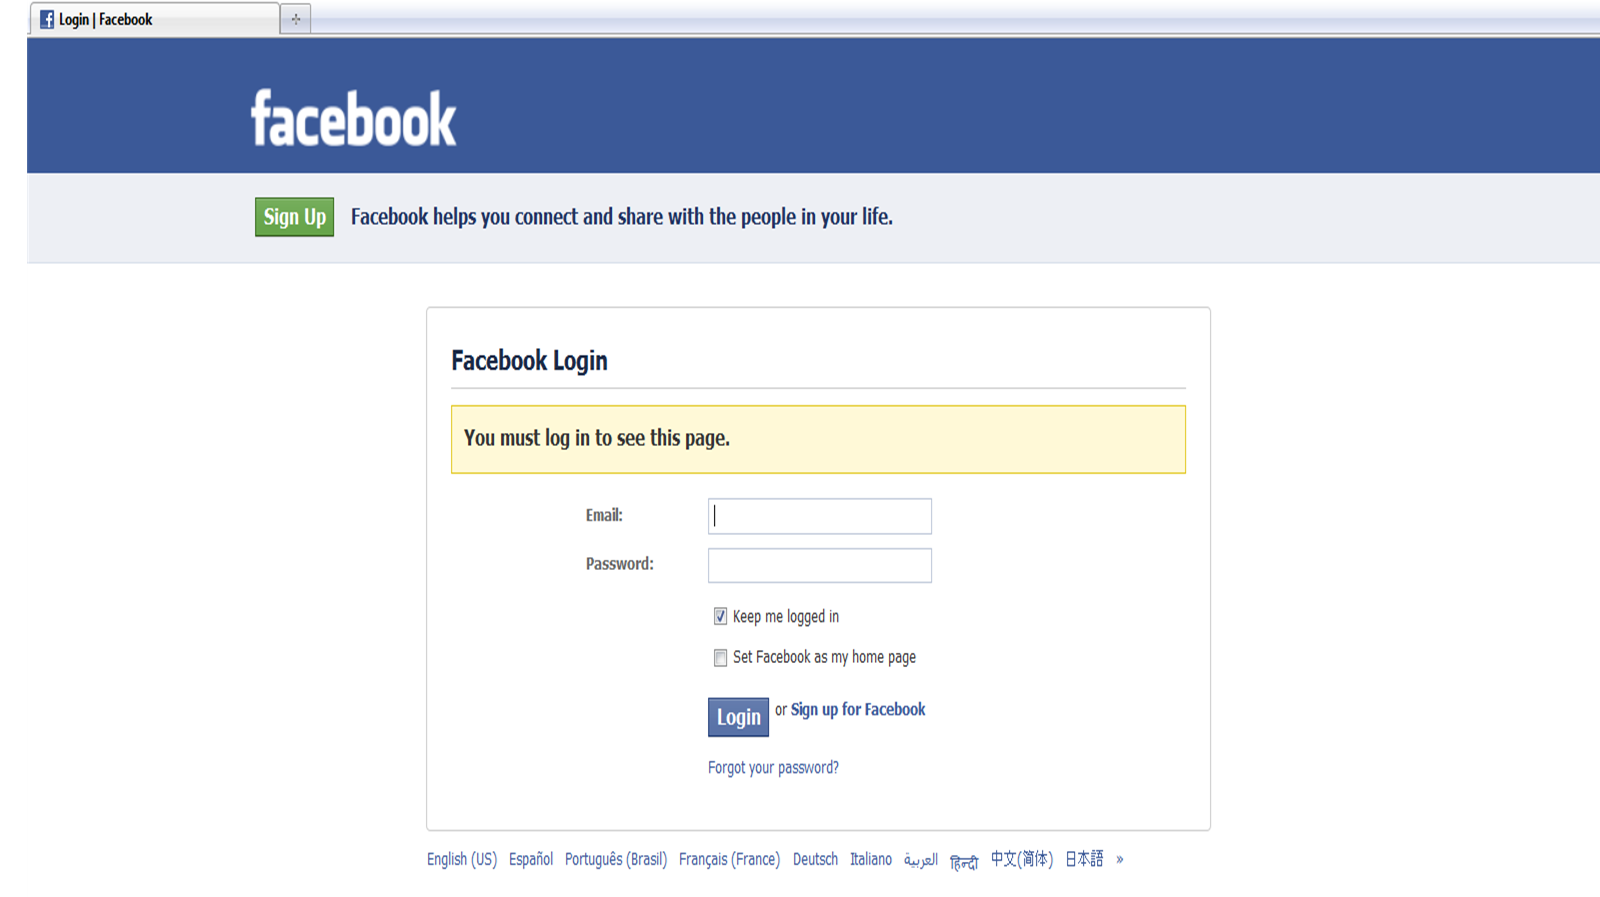 facebook.com facebook login to my account password. 